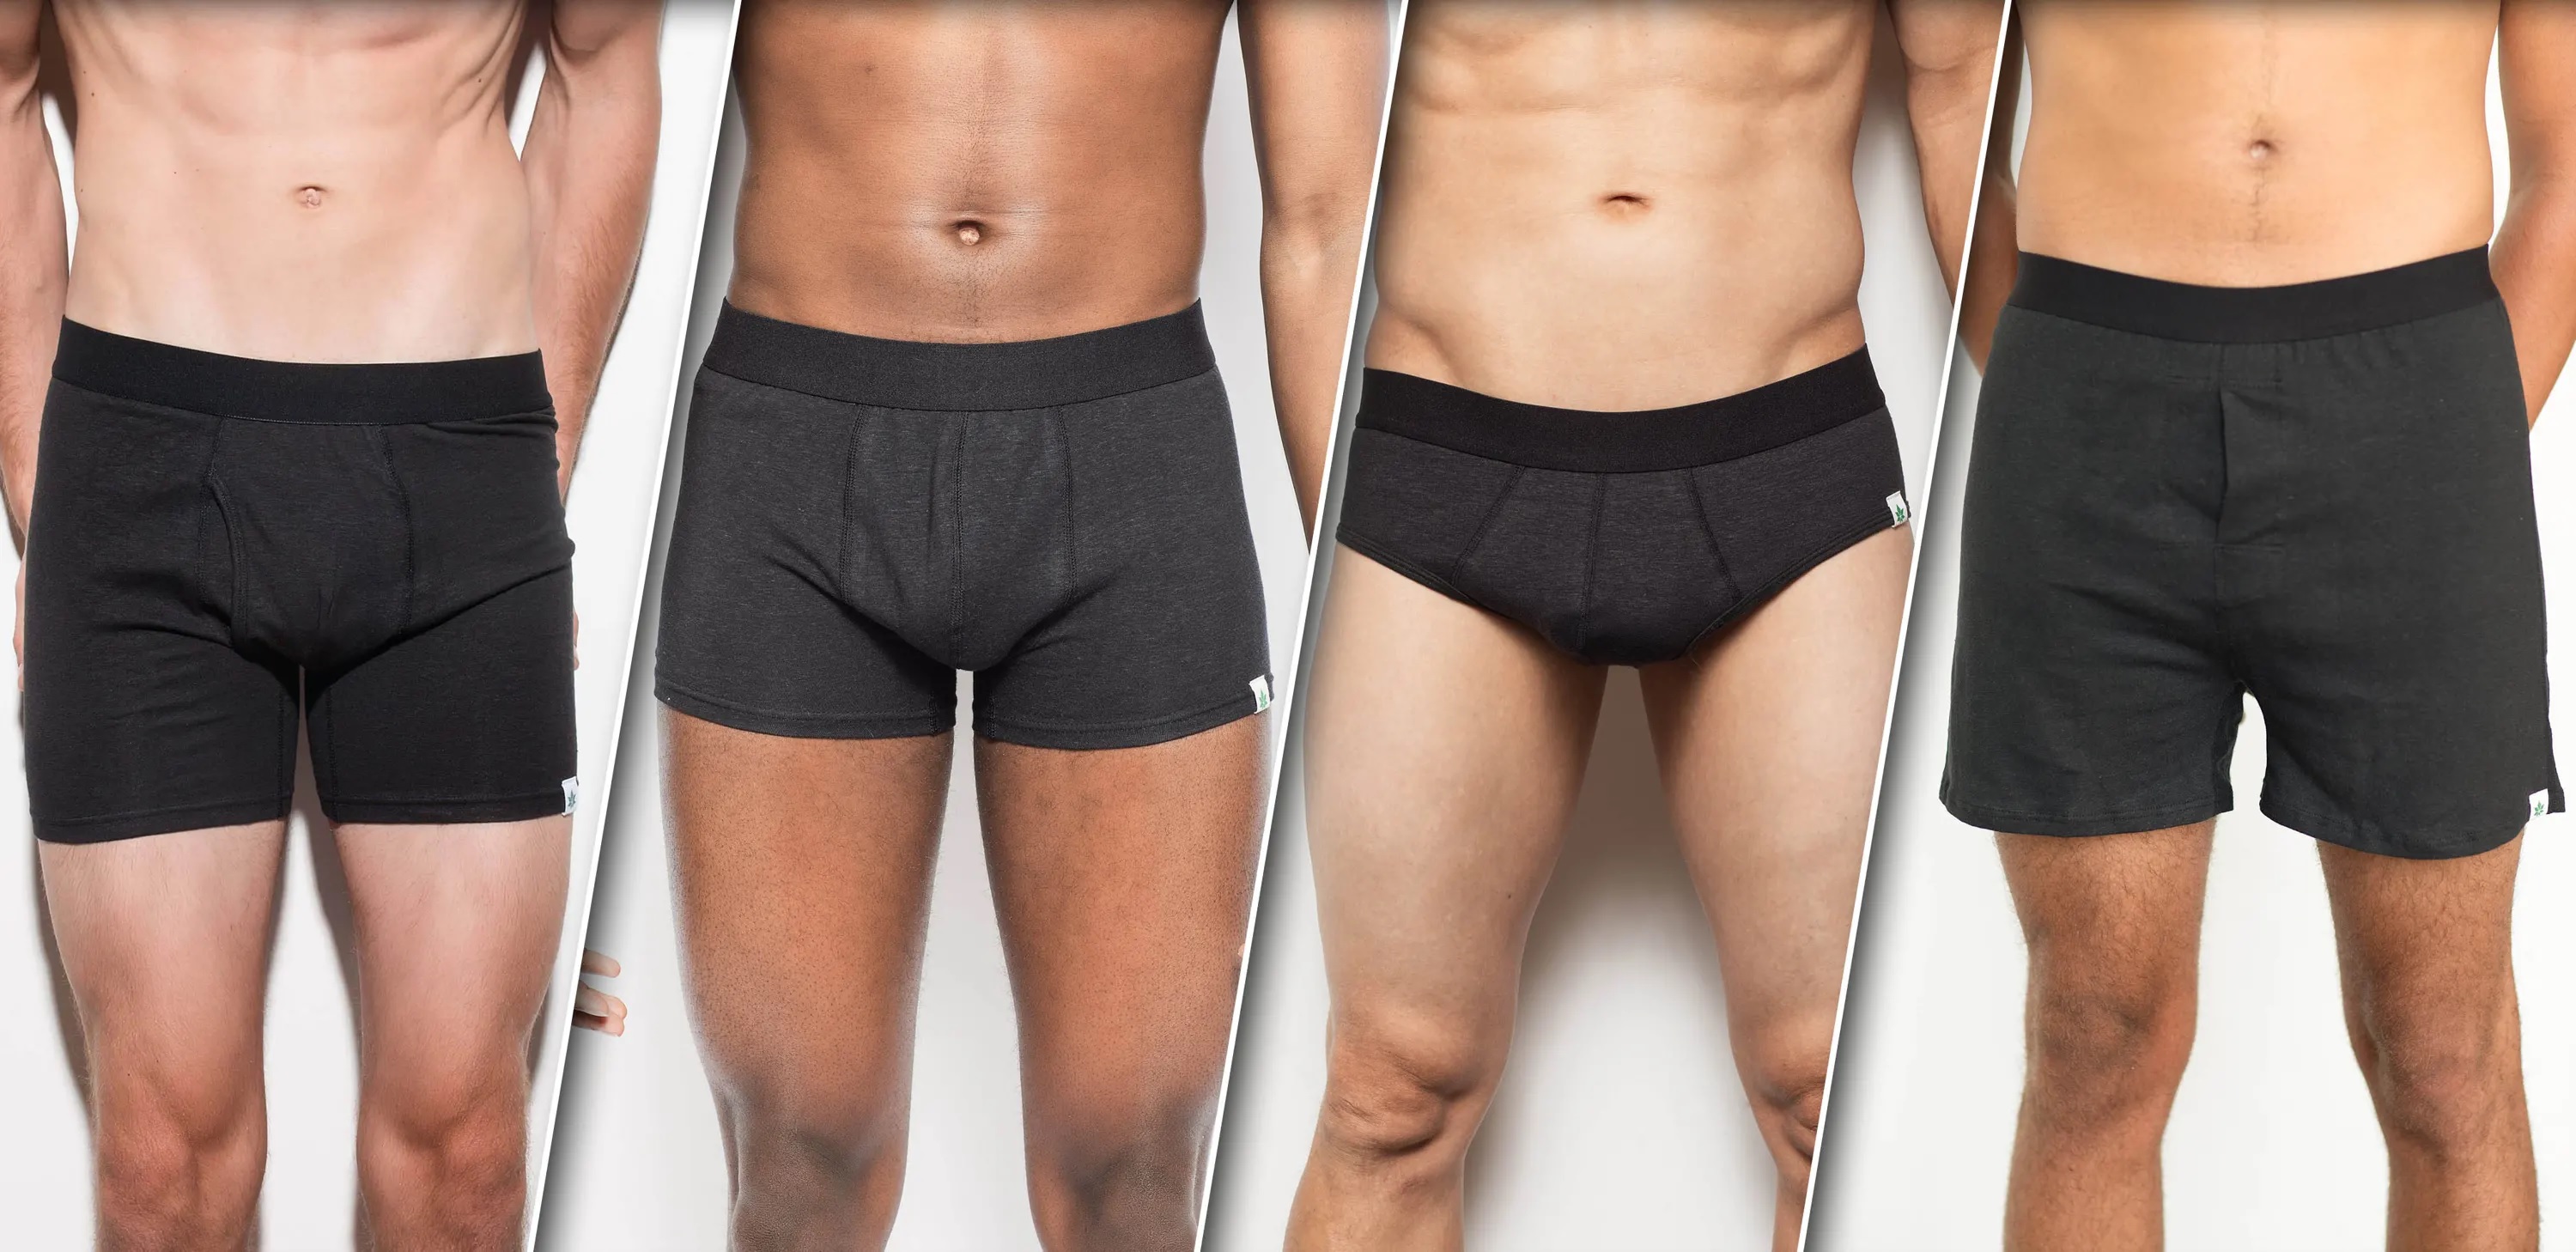 Types Of Men's Underwear You Can Shop Online